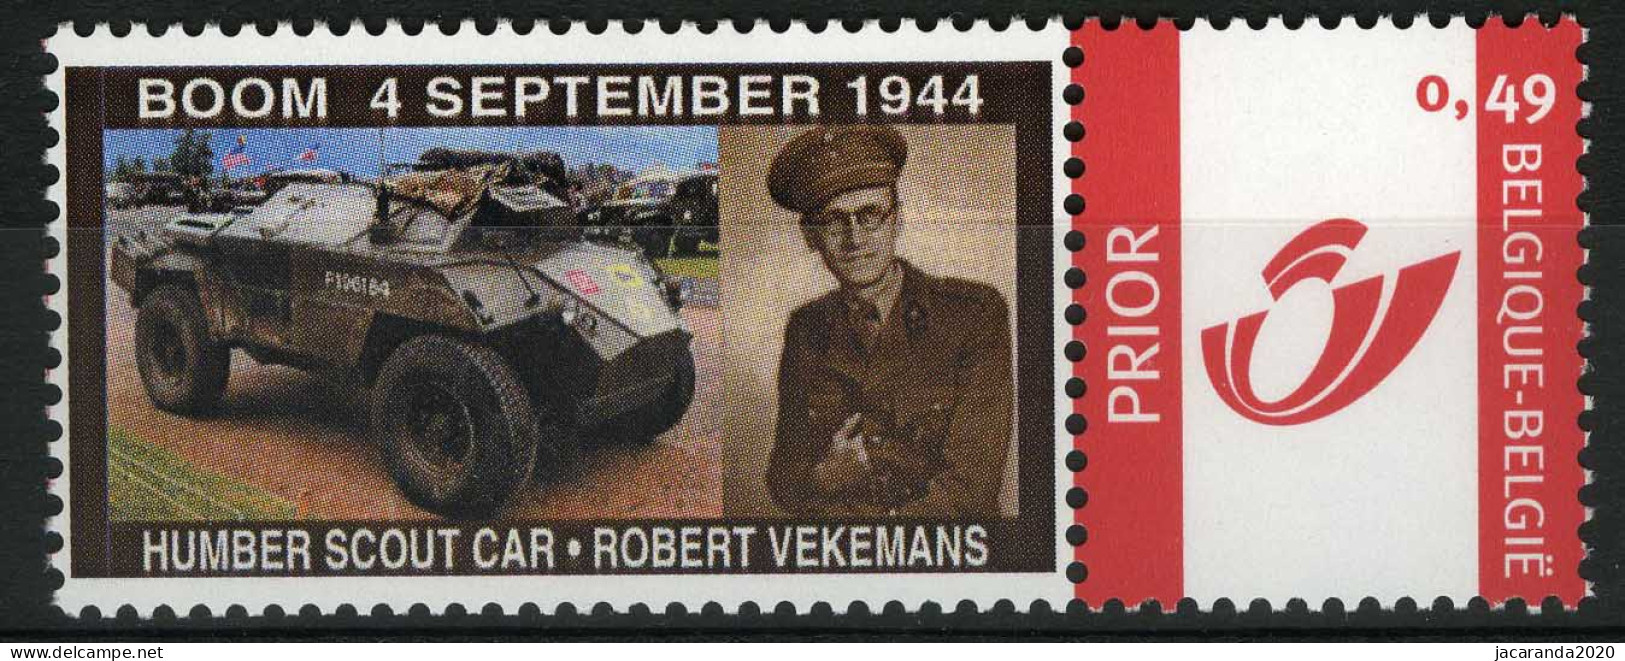 België 3183 - Duostamp - Humber Scout Car - Vekemans - Oorlog - Tank - Boom 4 September 1944 - Nuovi